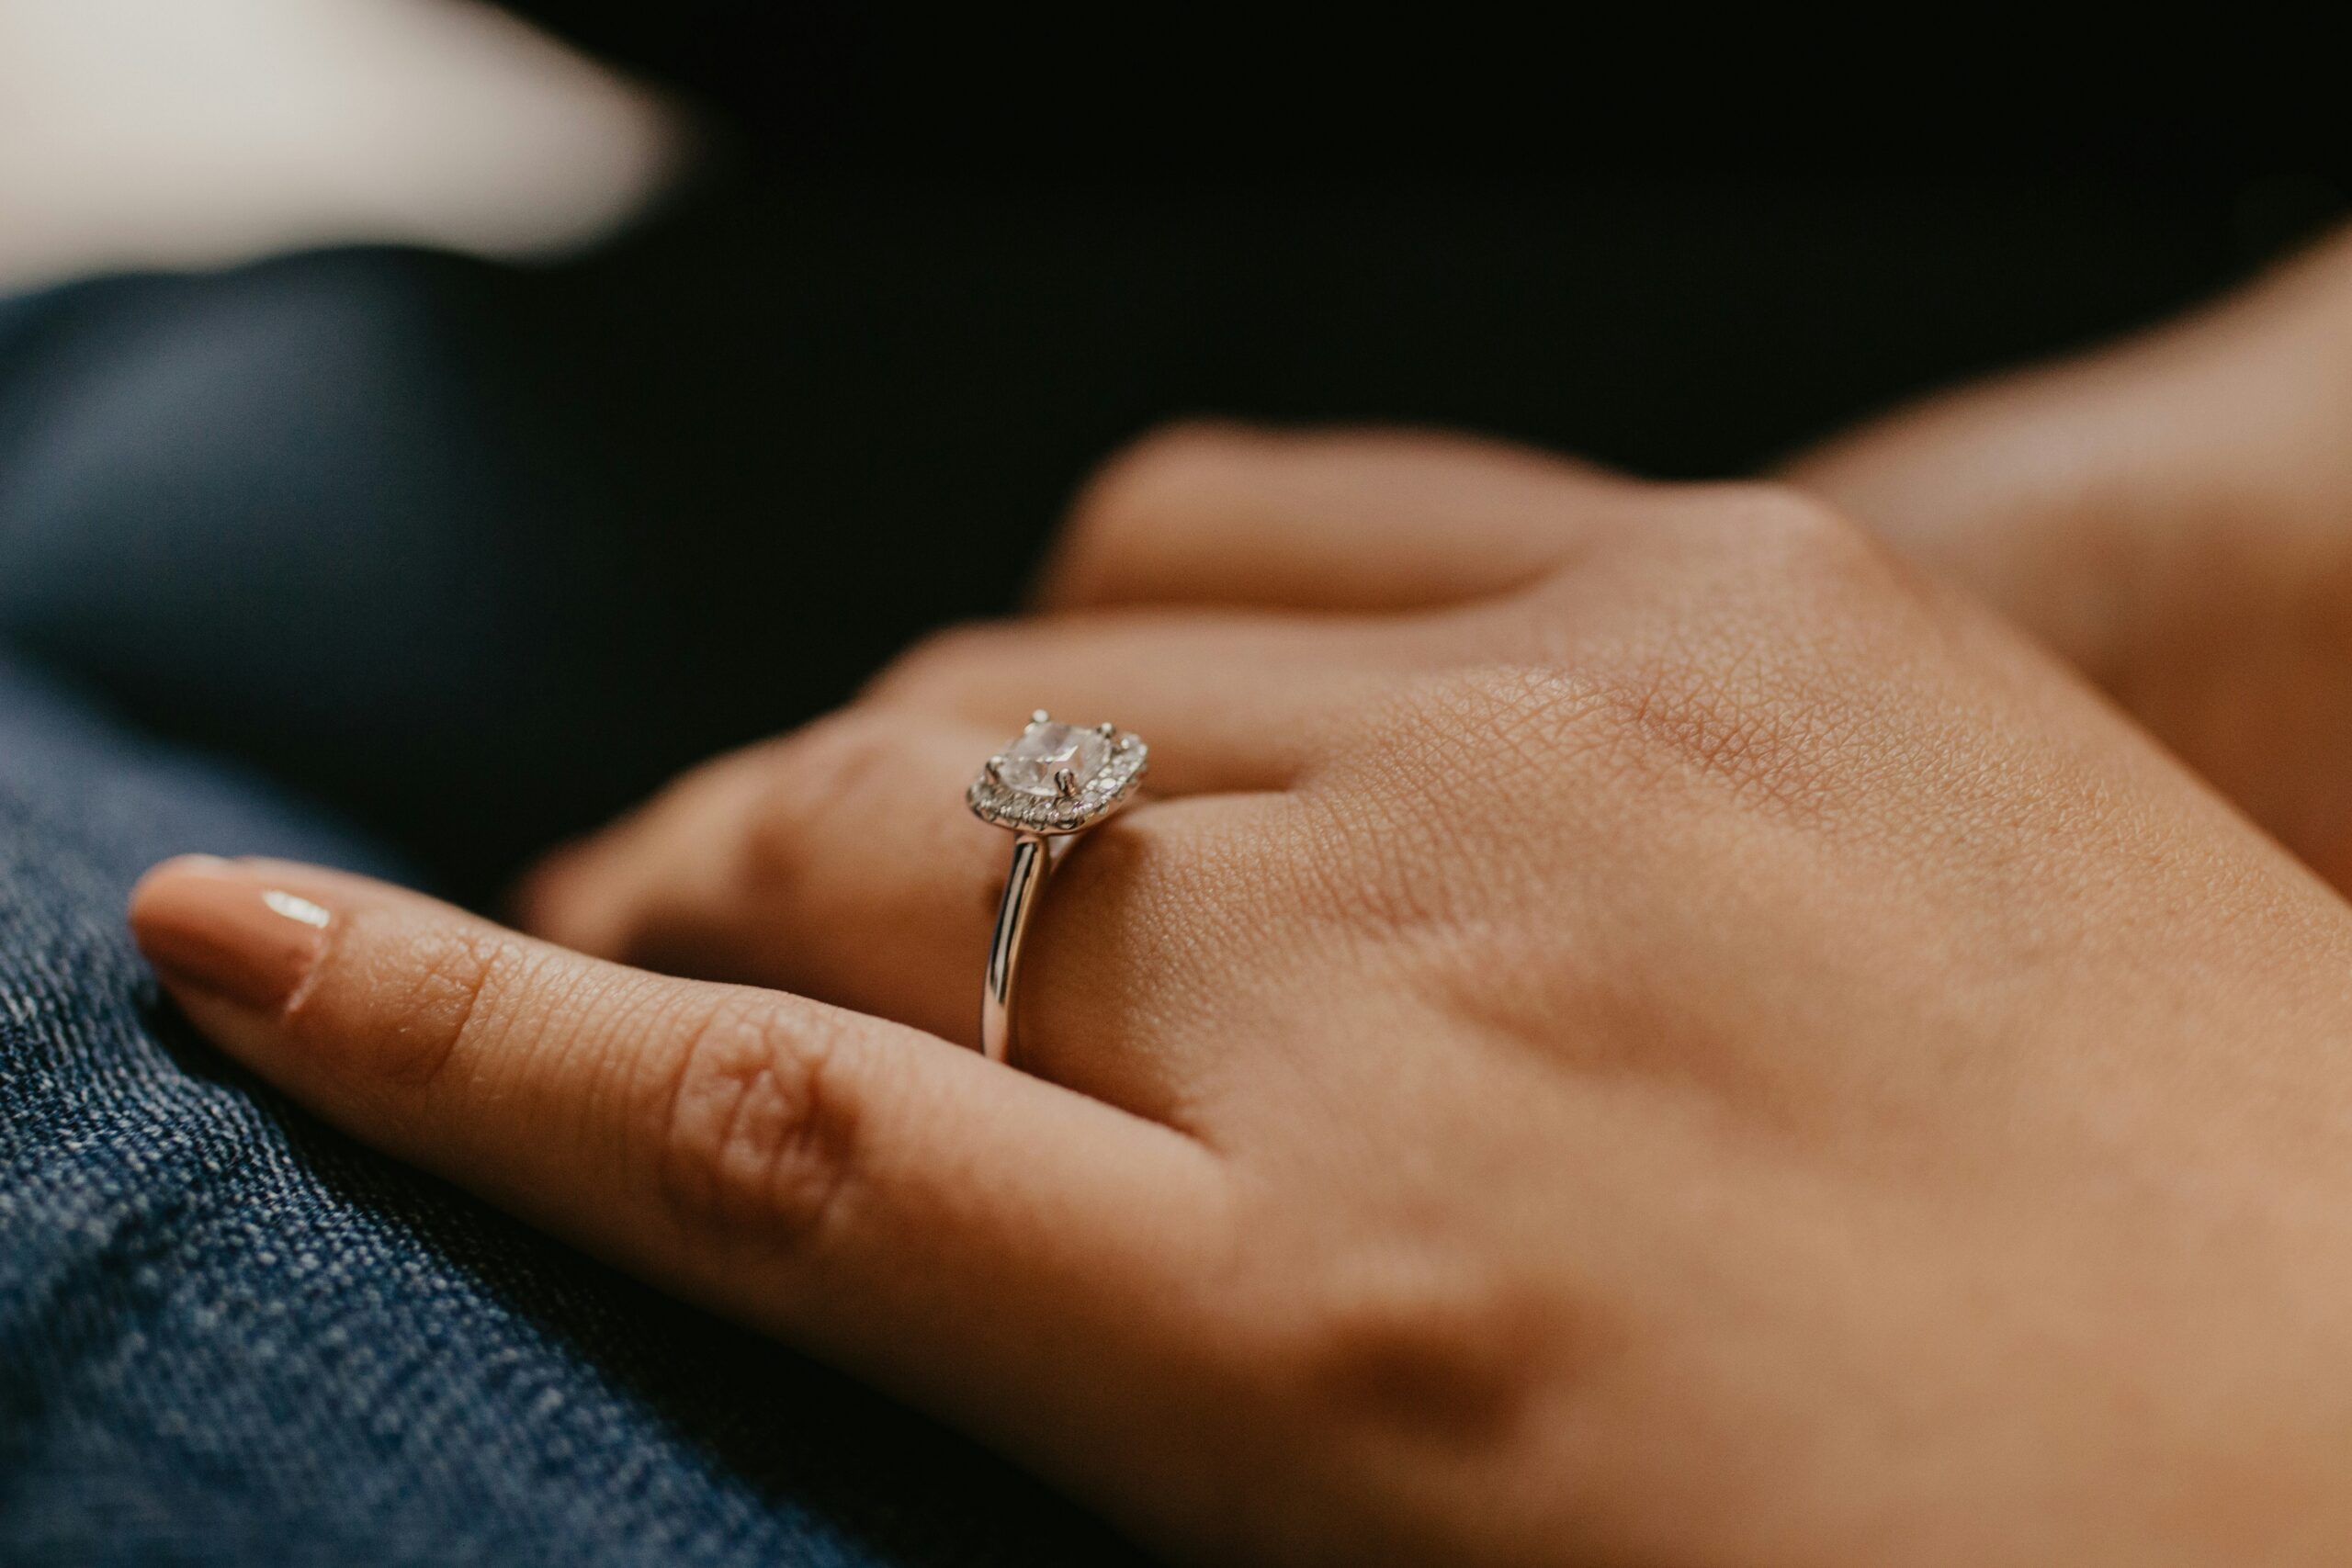 What Makes Princess-Cut Engagement Rings so Popular